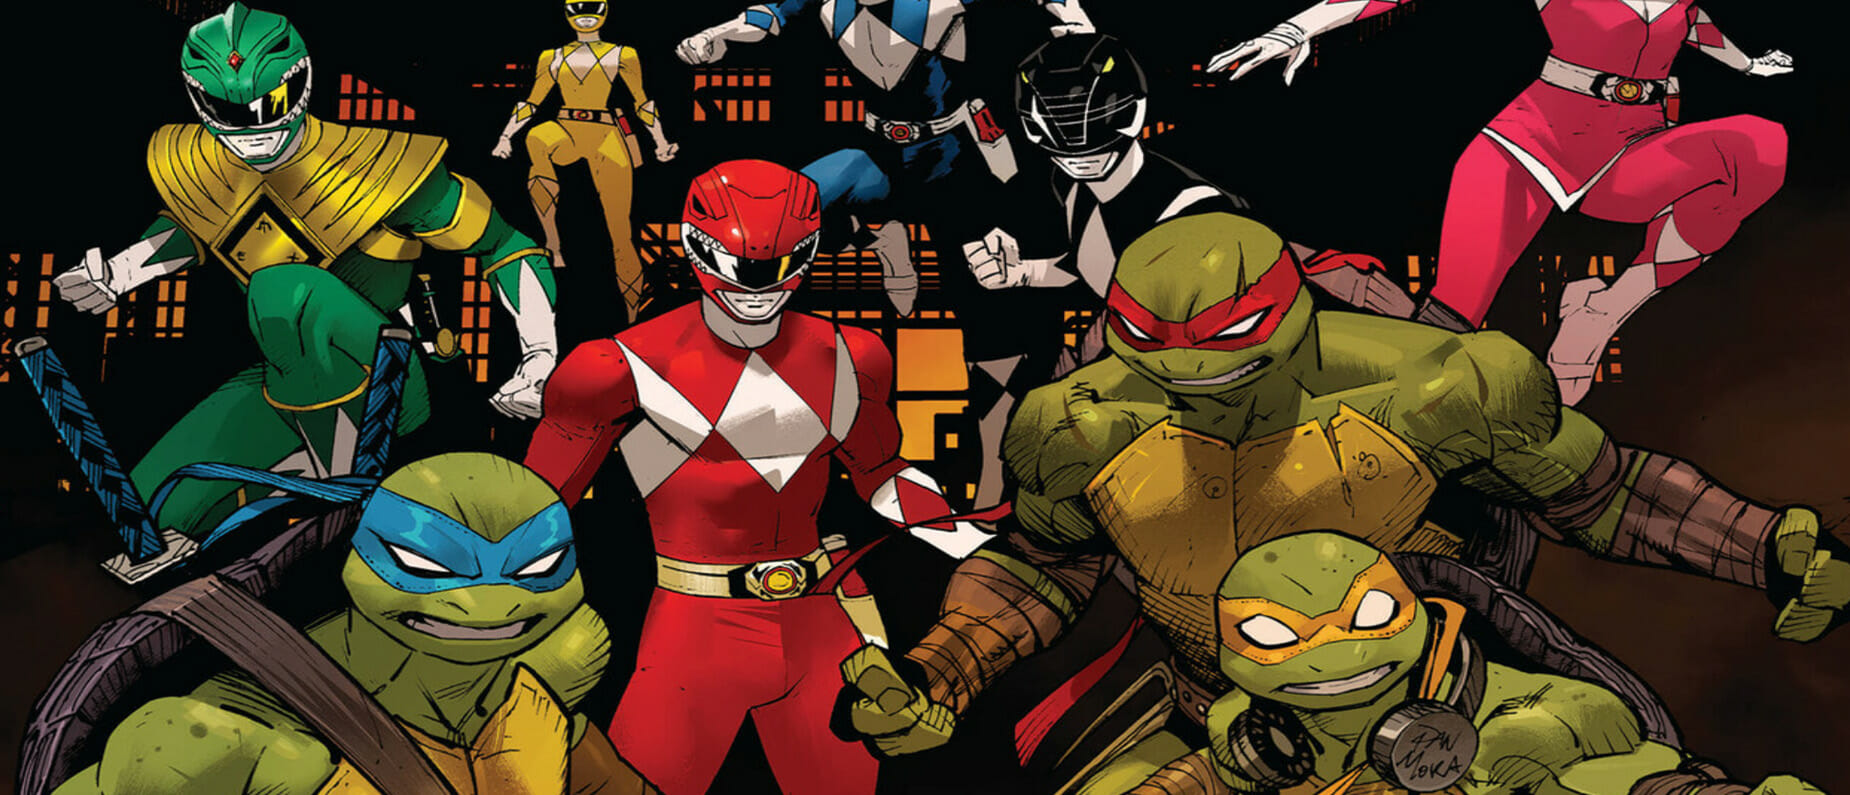 Mighty Morphin Power Rangers/Teenage Mutant Ninja Turtles - by Ryan Parrott  (Paperback)